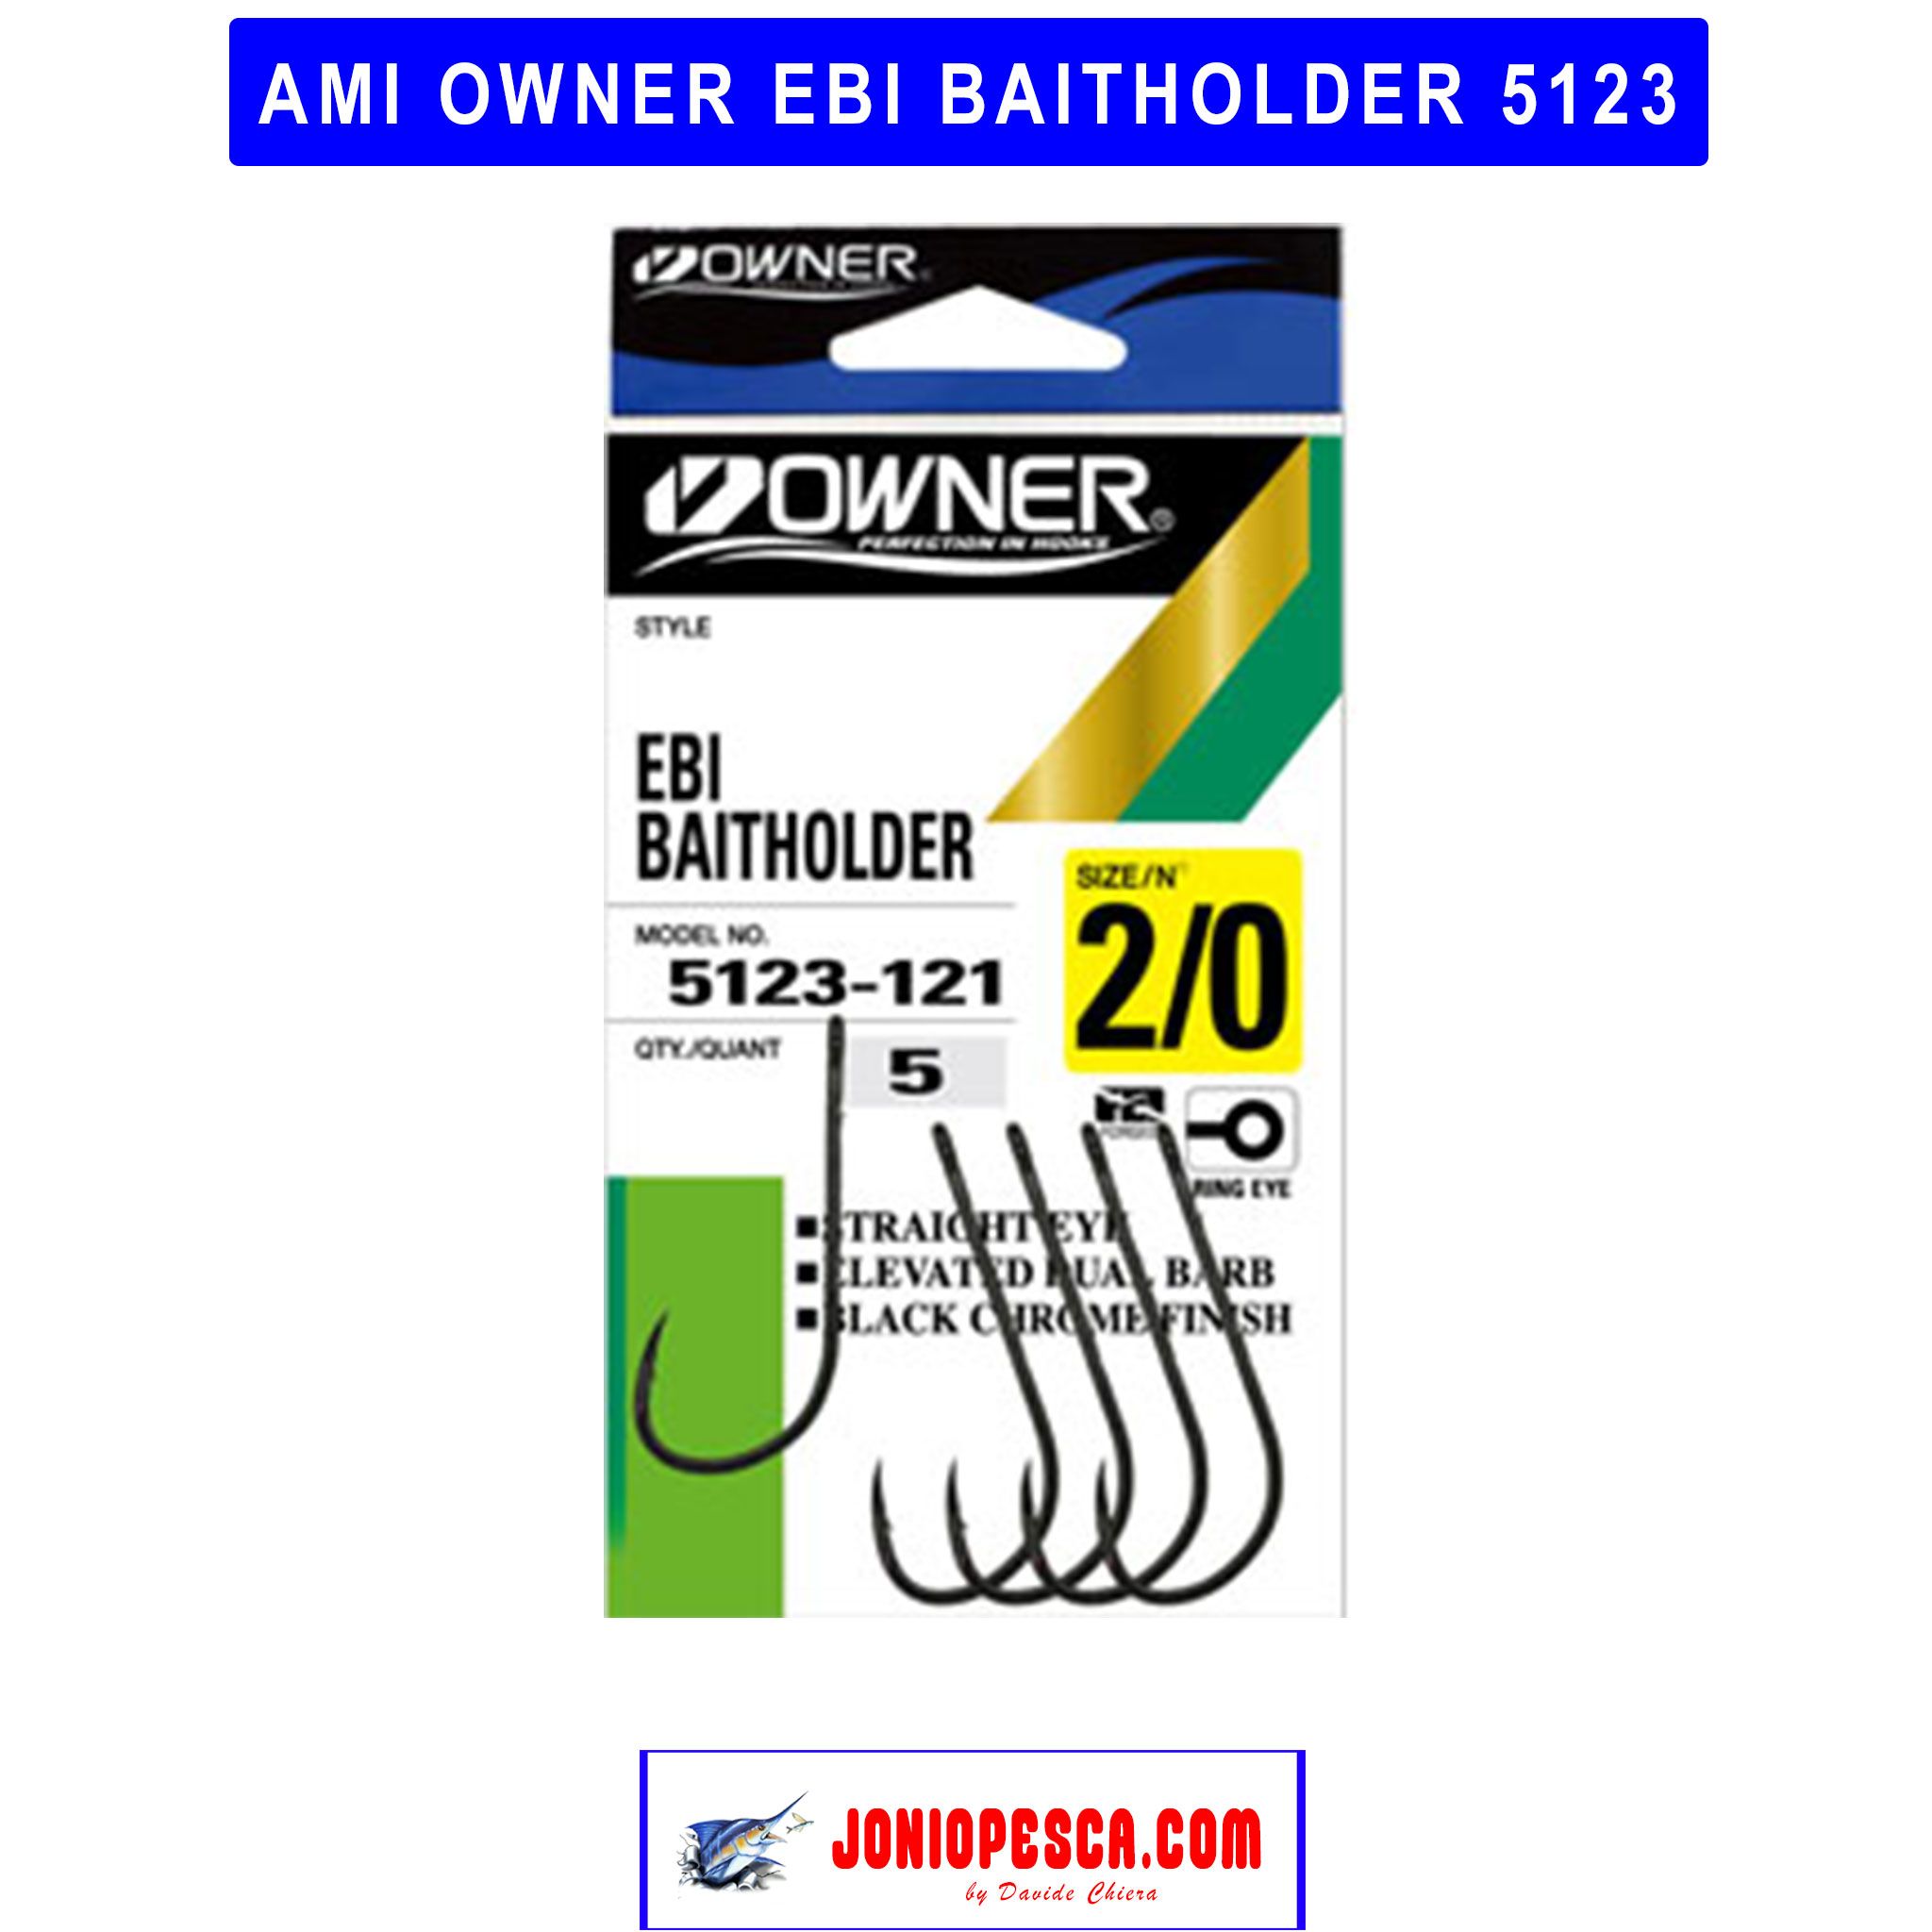 ami-owner-ebi-baitholder-5123